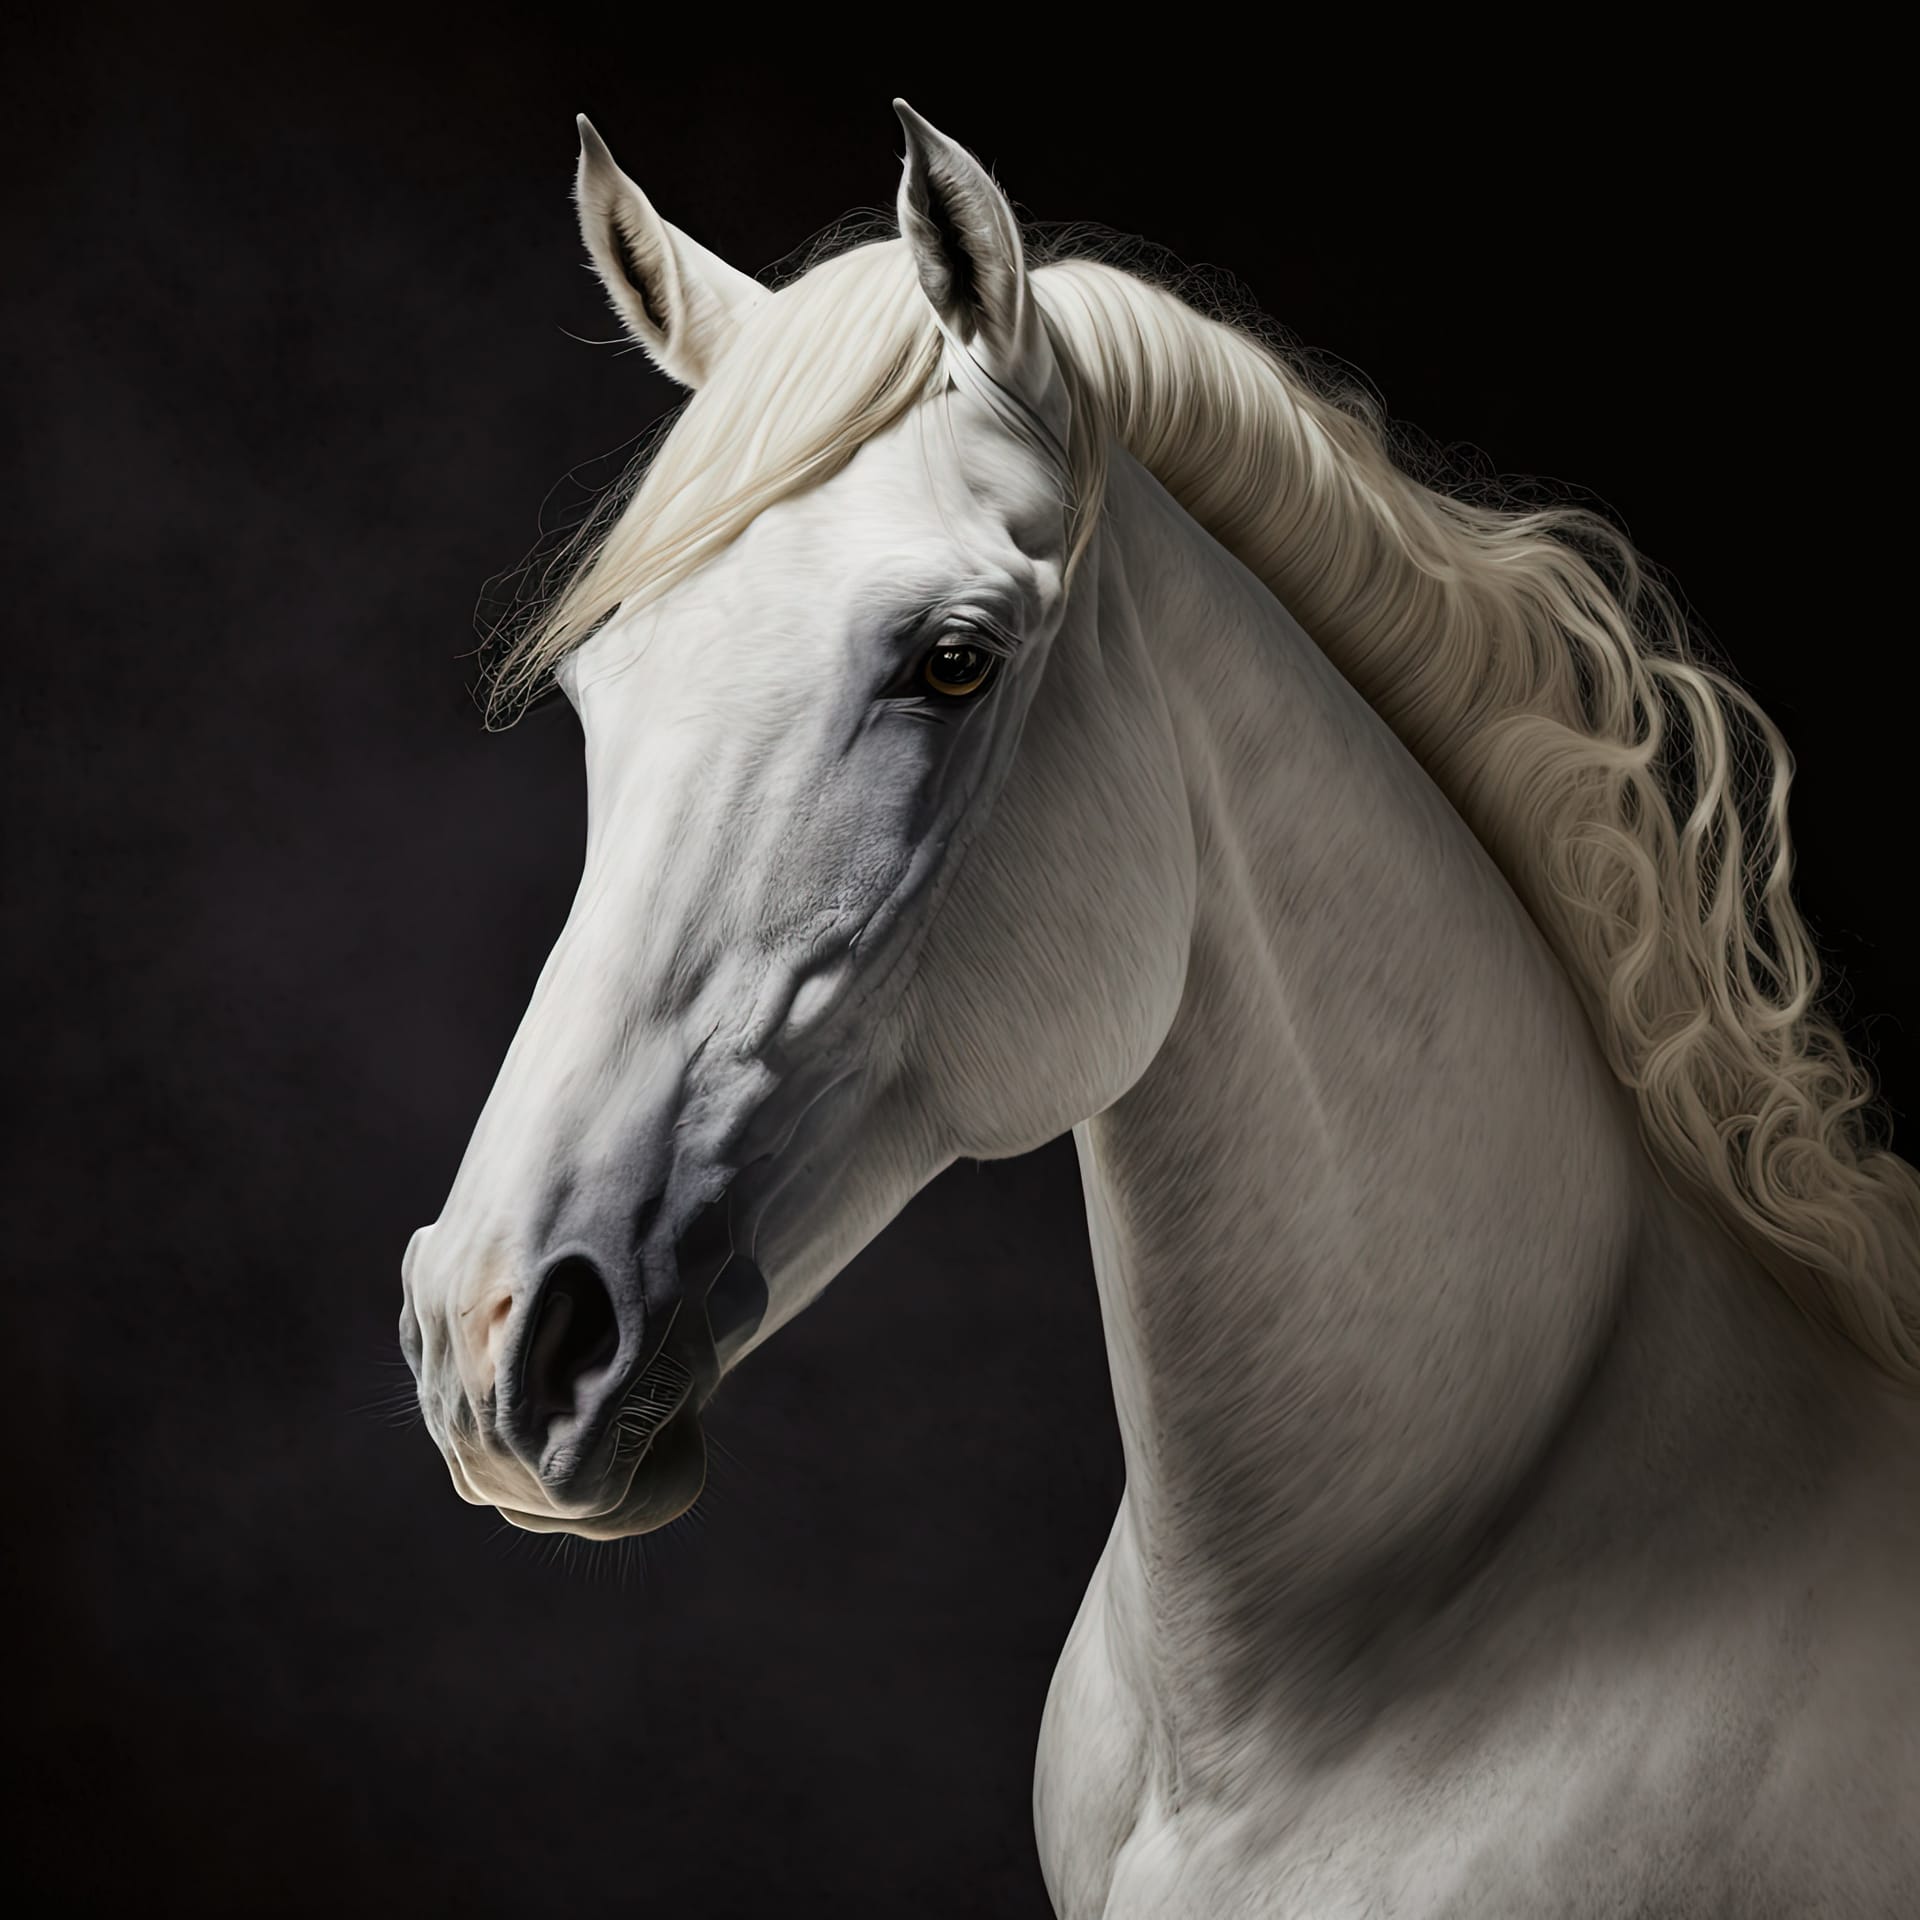 Beautiful majestic horse image ultra realistic